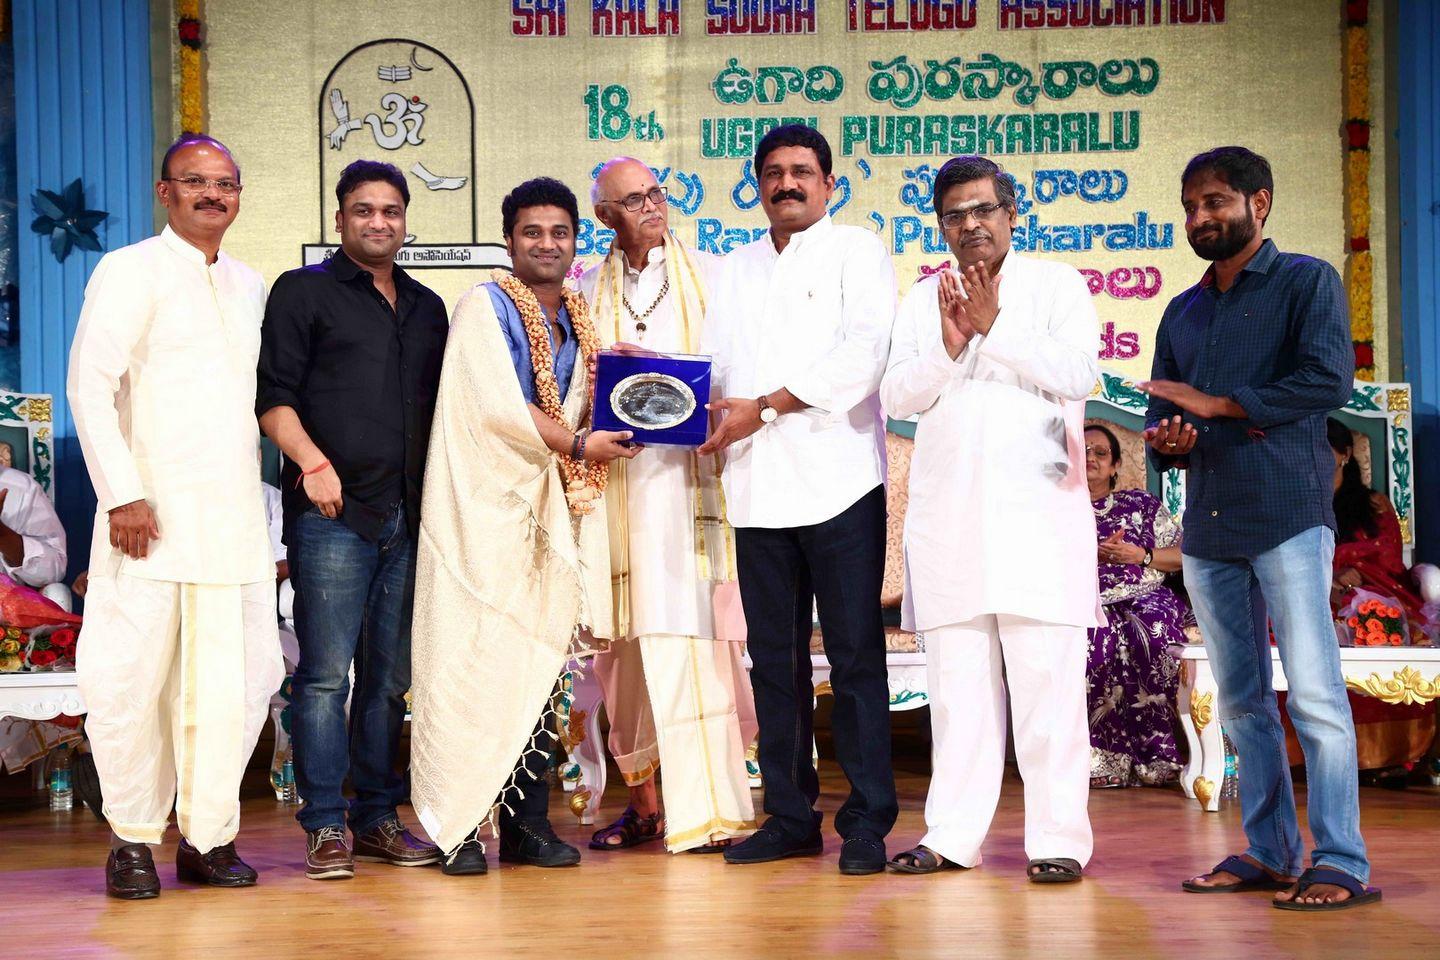 Kala Sudha Awards 2016 Photos